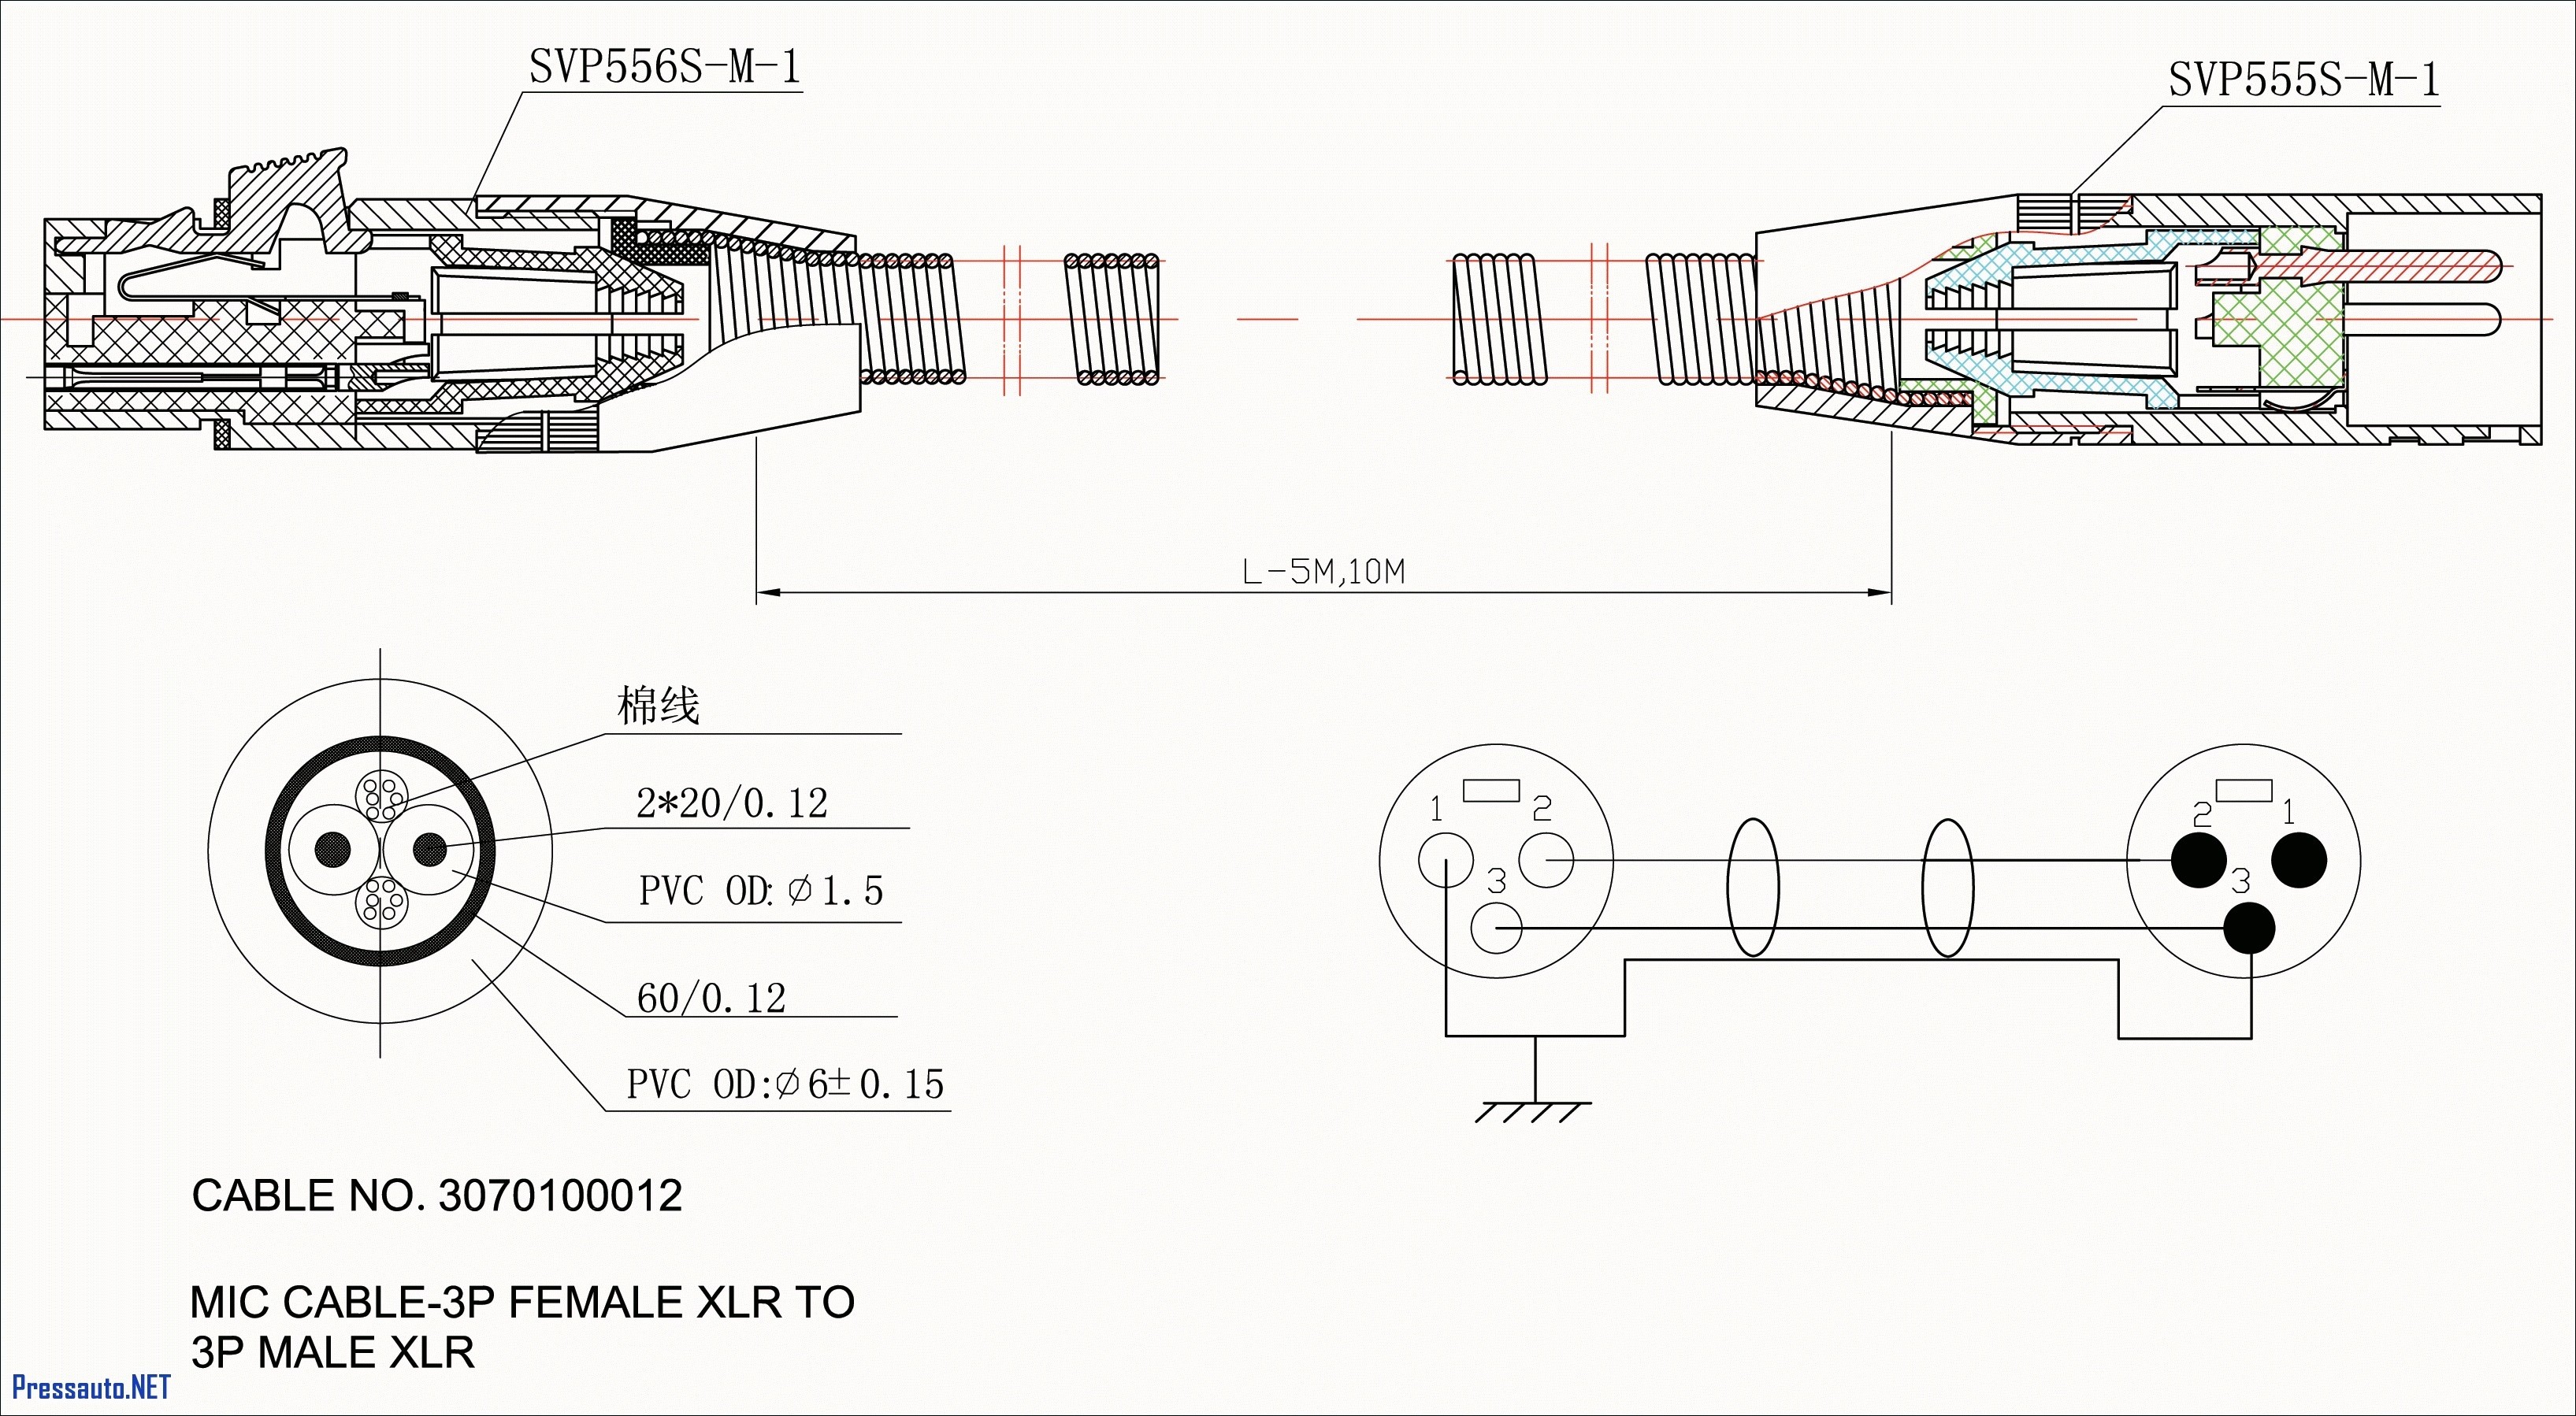 Mercruiser Wiring Diagram New Wiring Diagram for Mando Alternator Refrence Wiring Diagram for